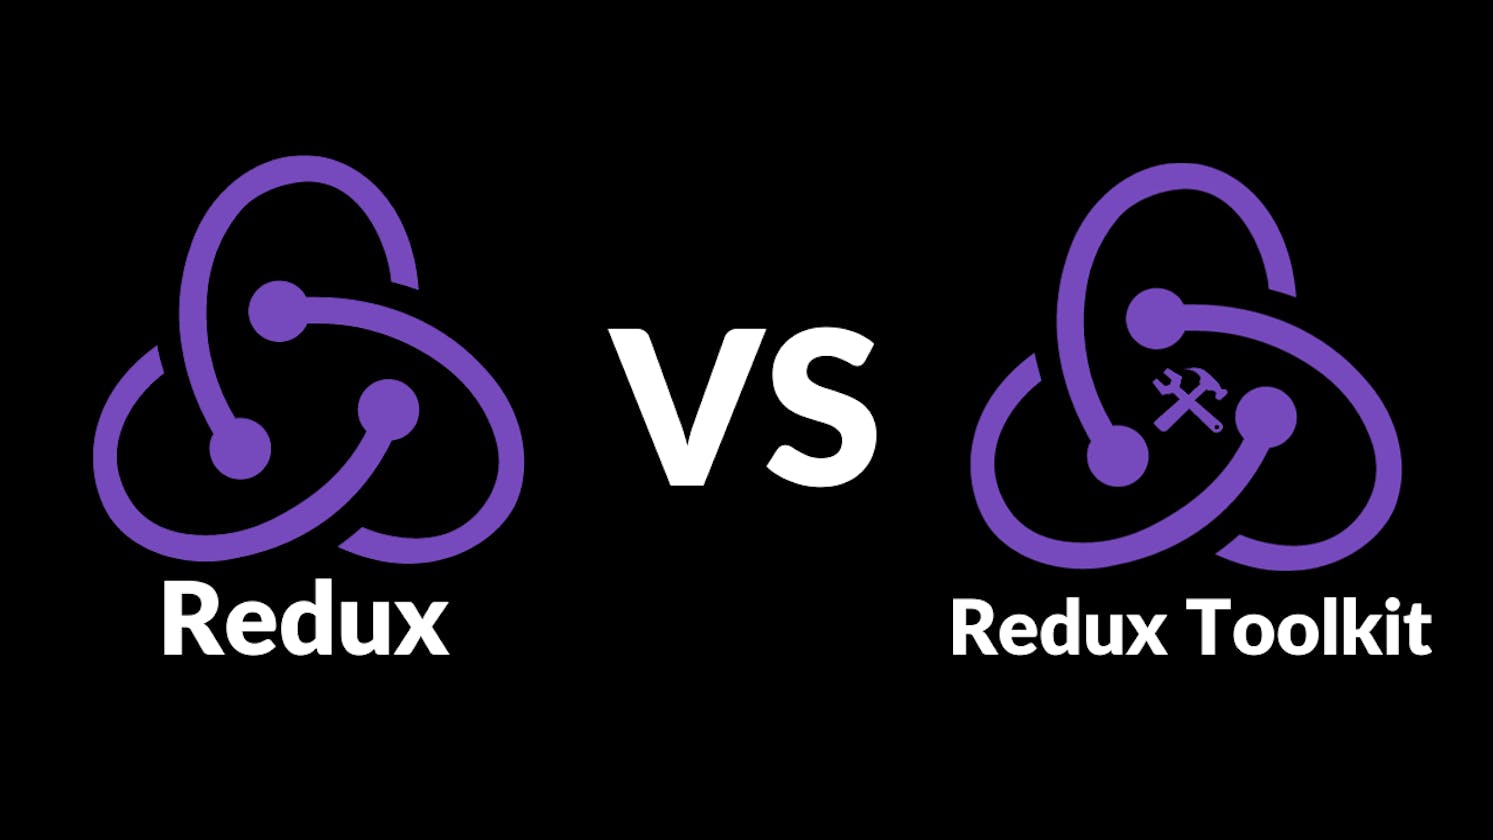 Redux vs Redux Toolkit